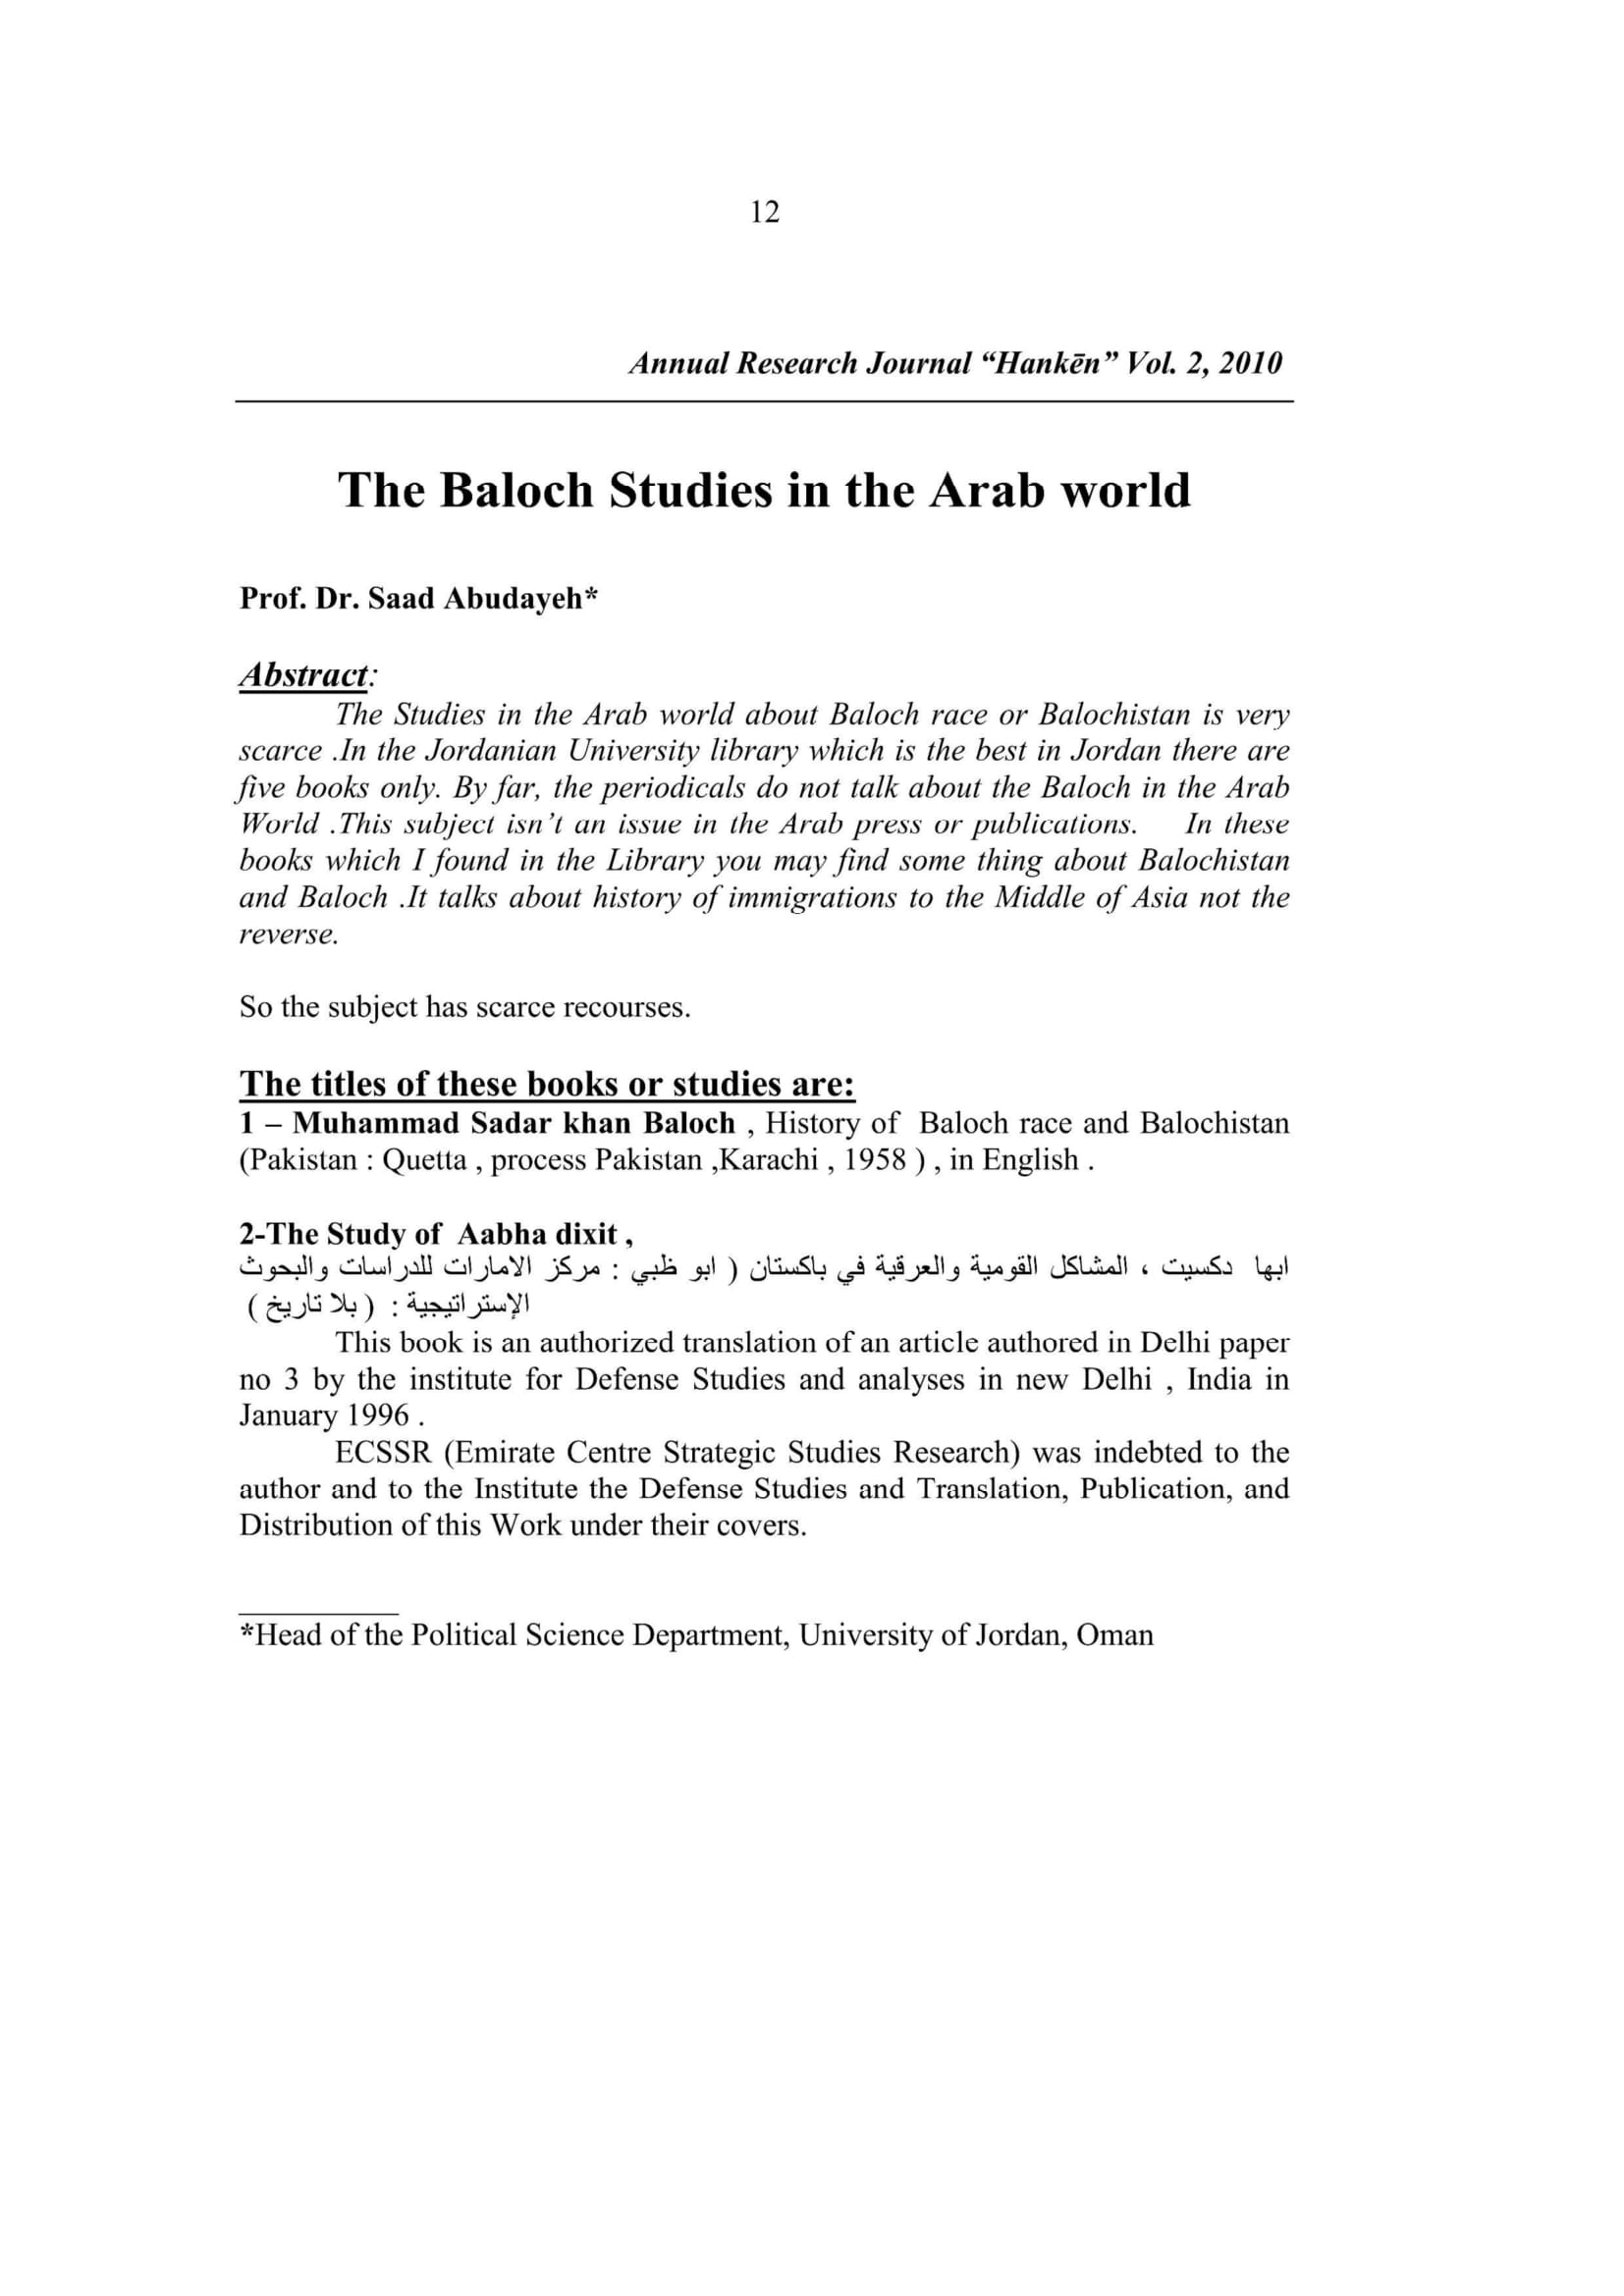 The Baloch Studies in the Arab world